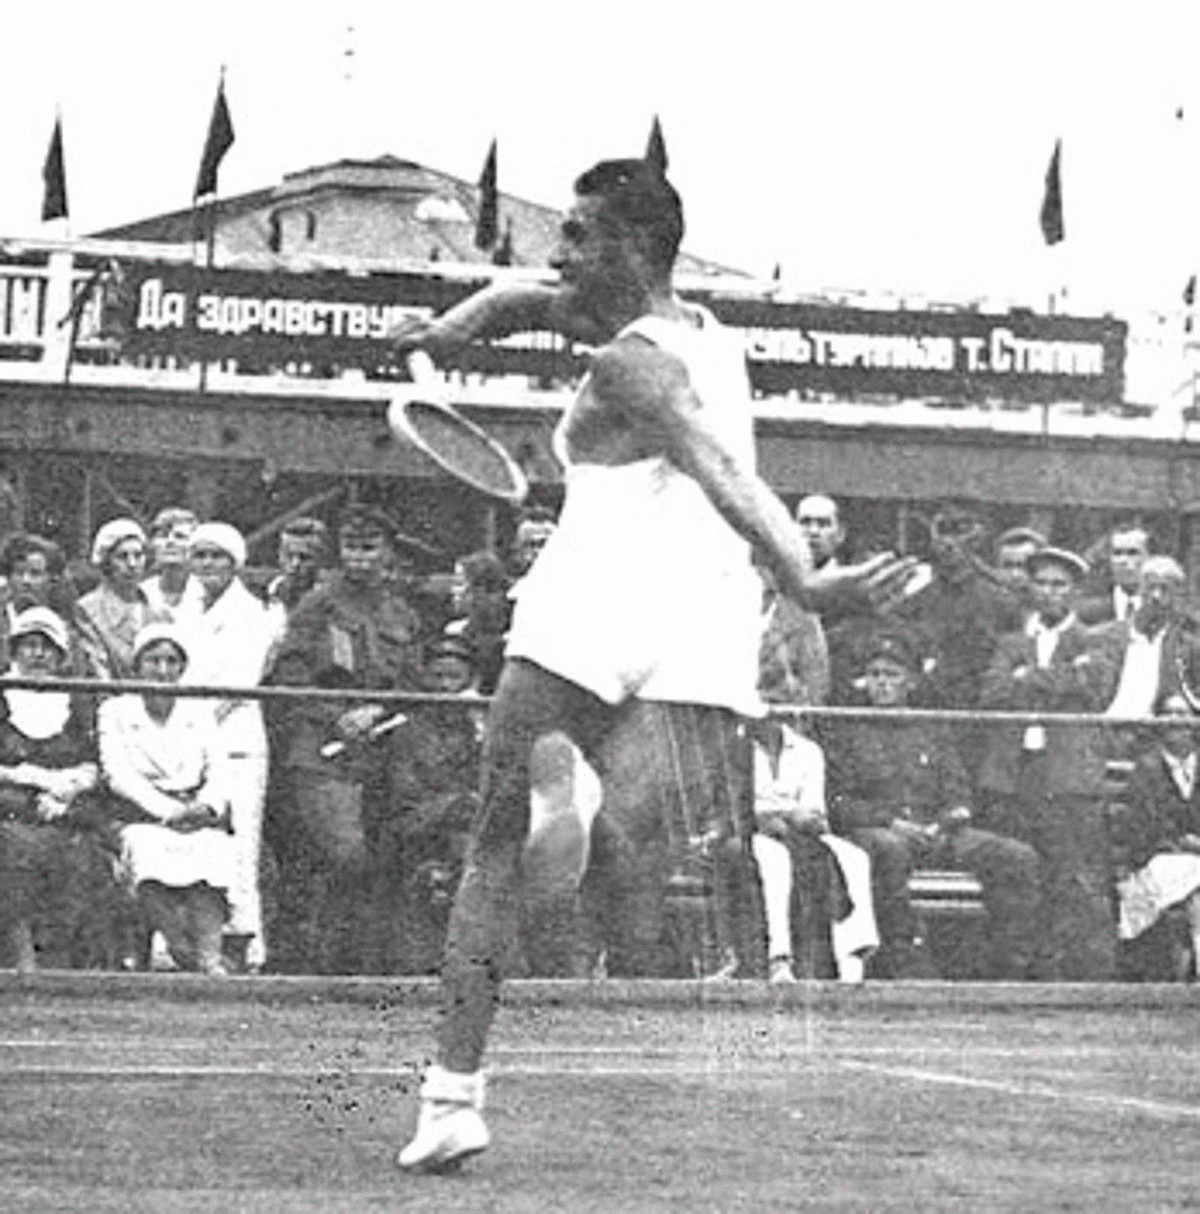 Archil Mdivani on the tennis court